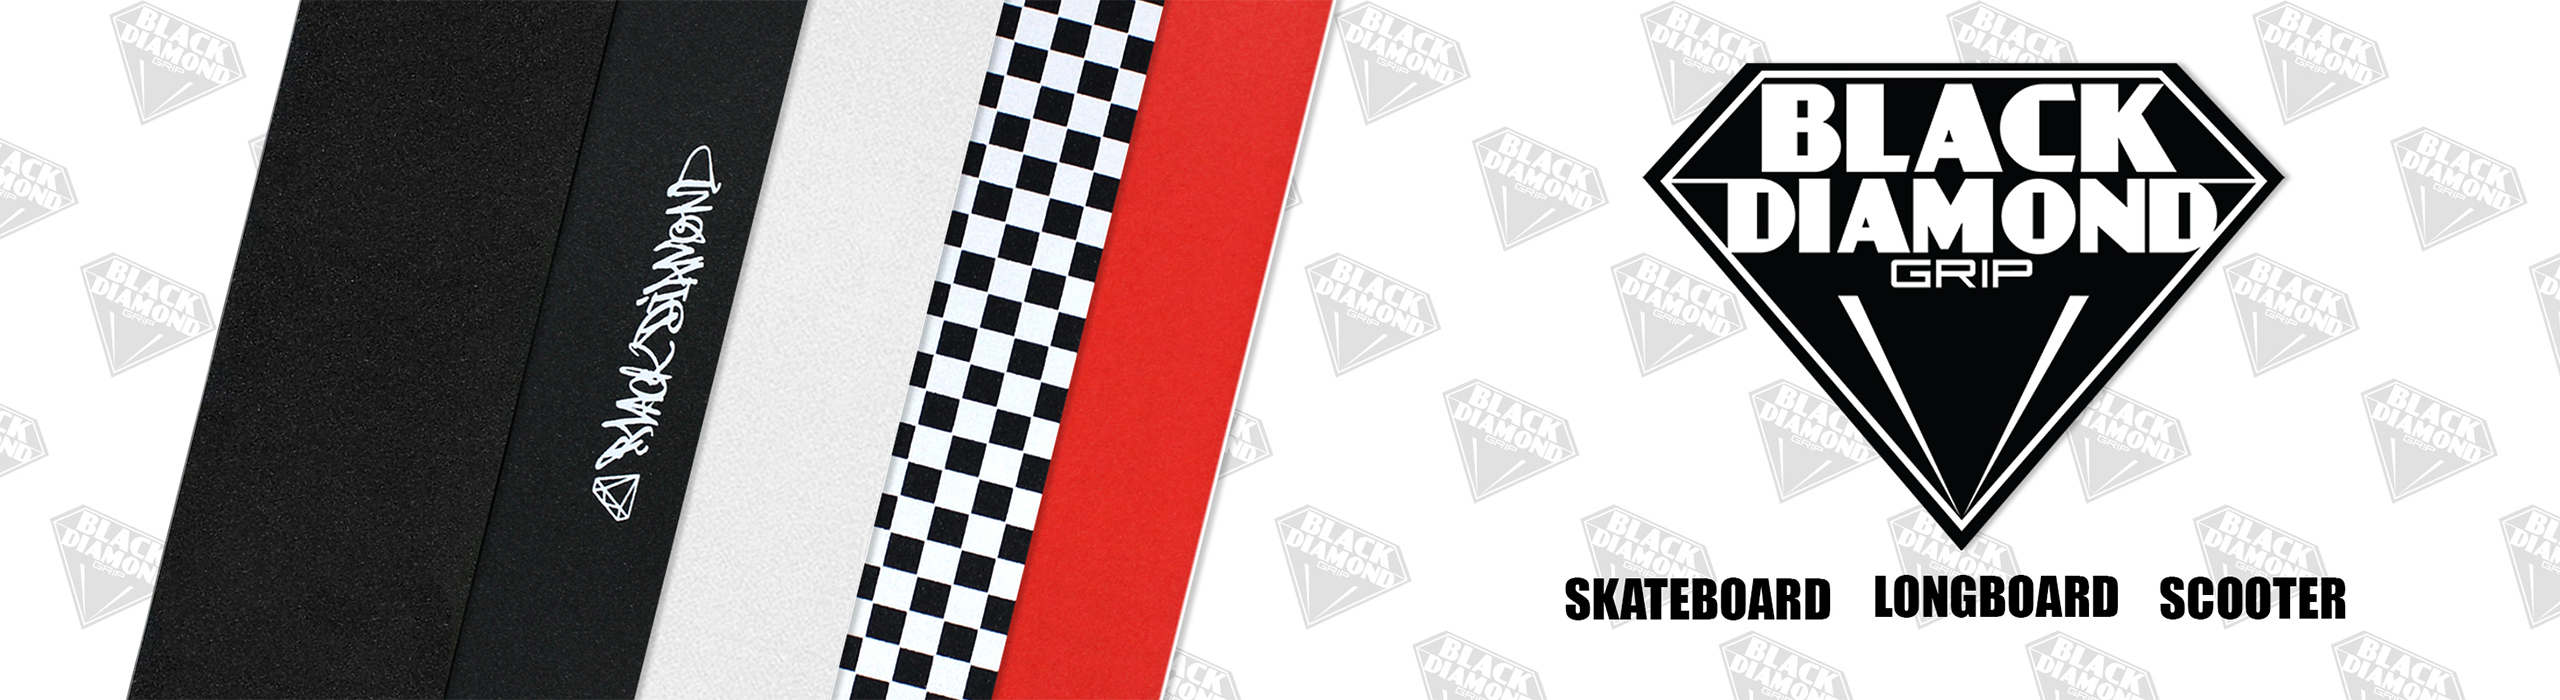 Black Diamond Griptape Sheets for Skateboards, Longboards, & Scooters